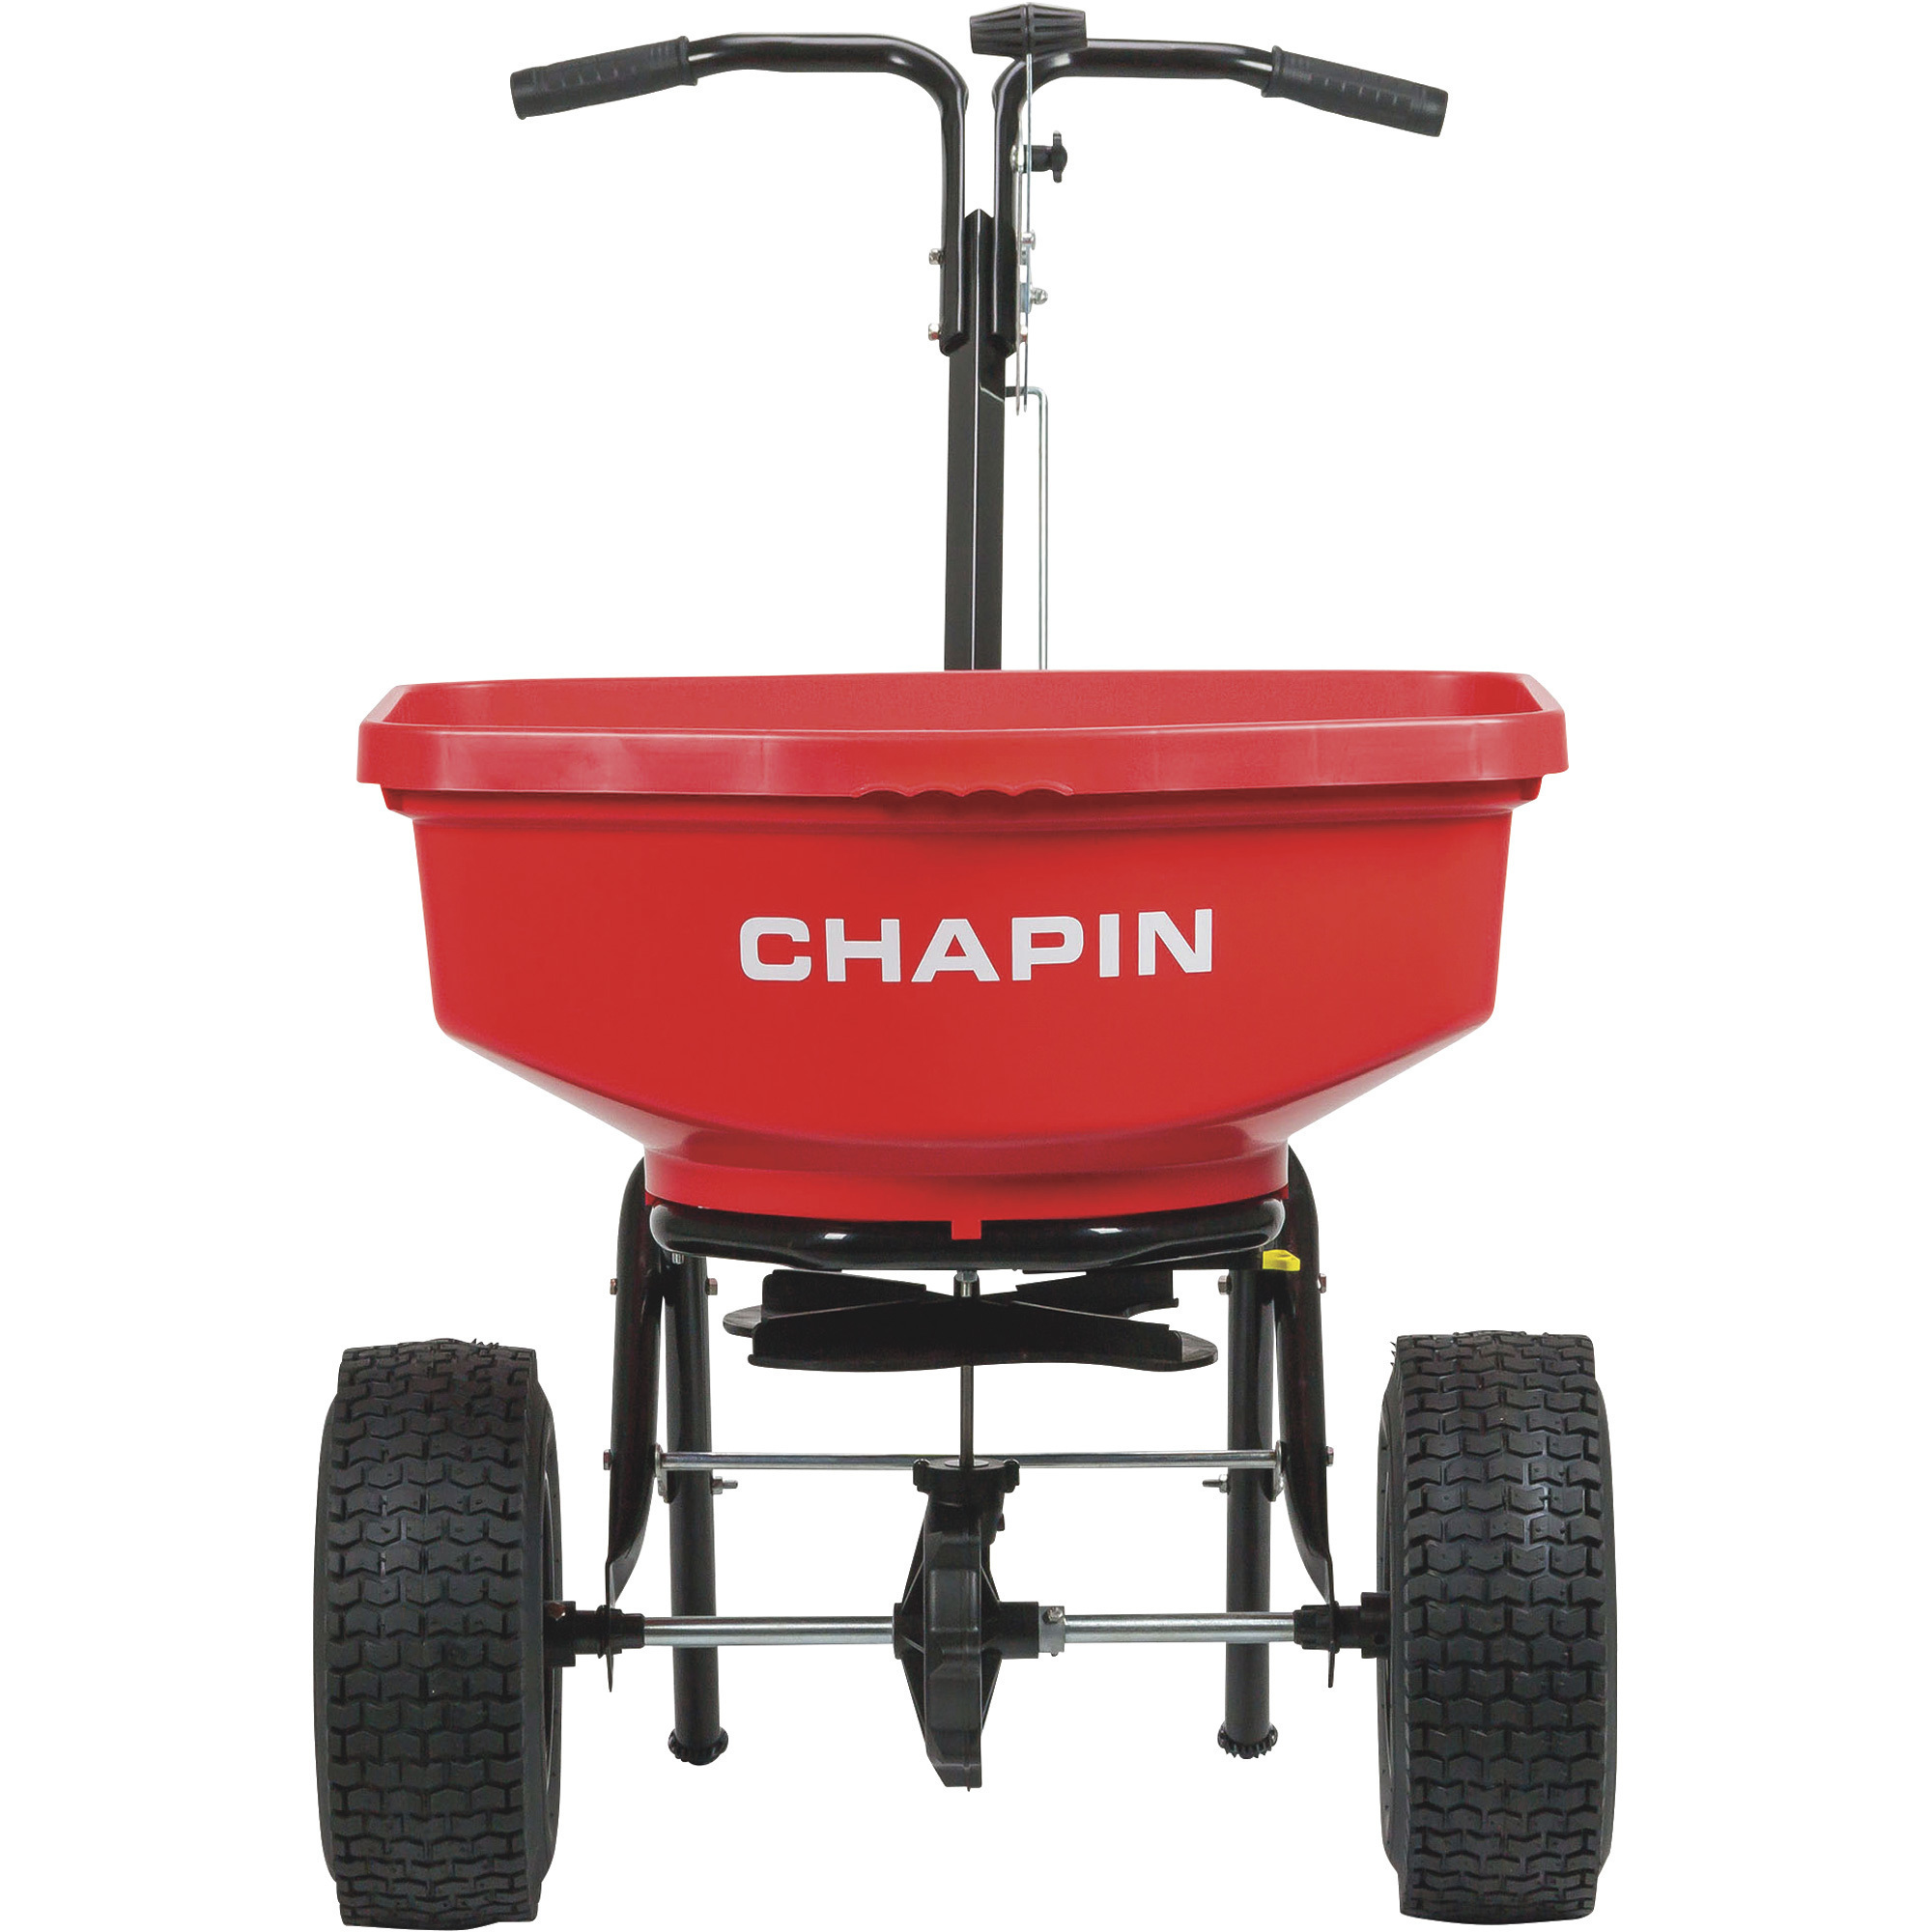 Chapin Contractor Broadcast Turf Spreader, 80-Lb. Capacity, Model 8301C